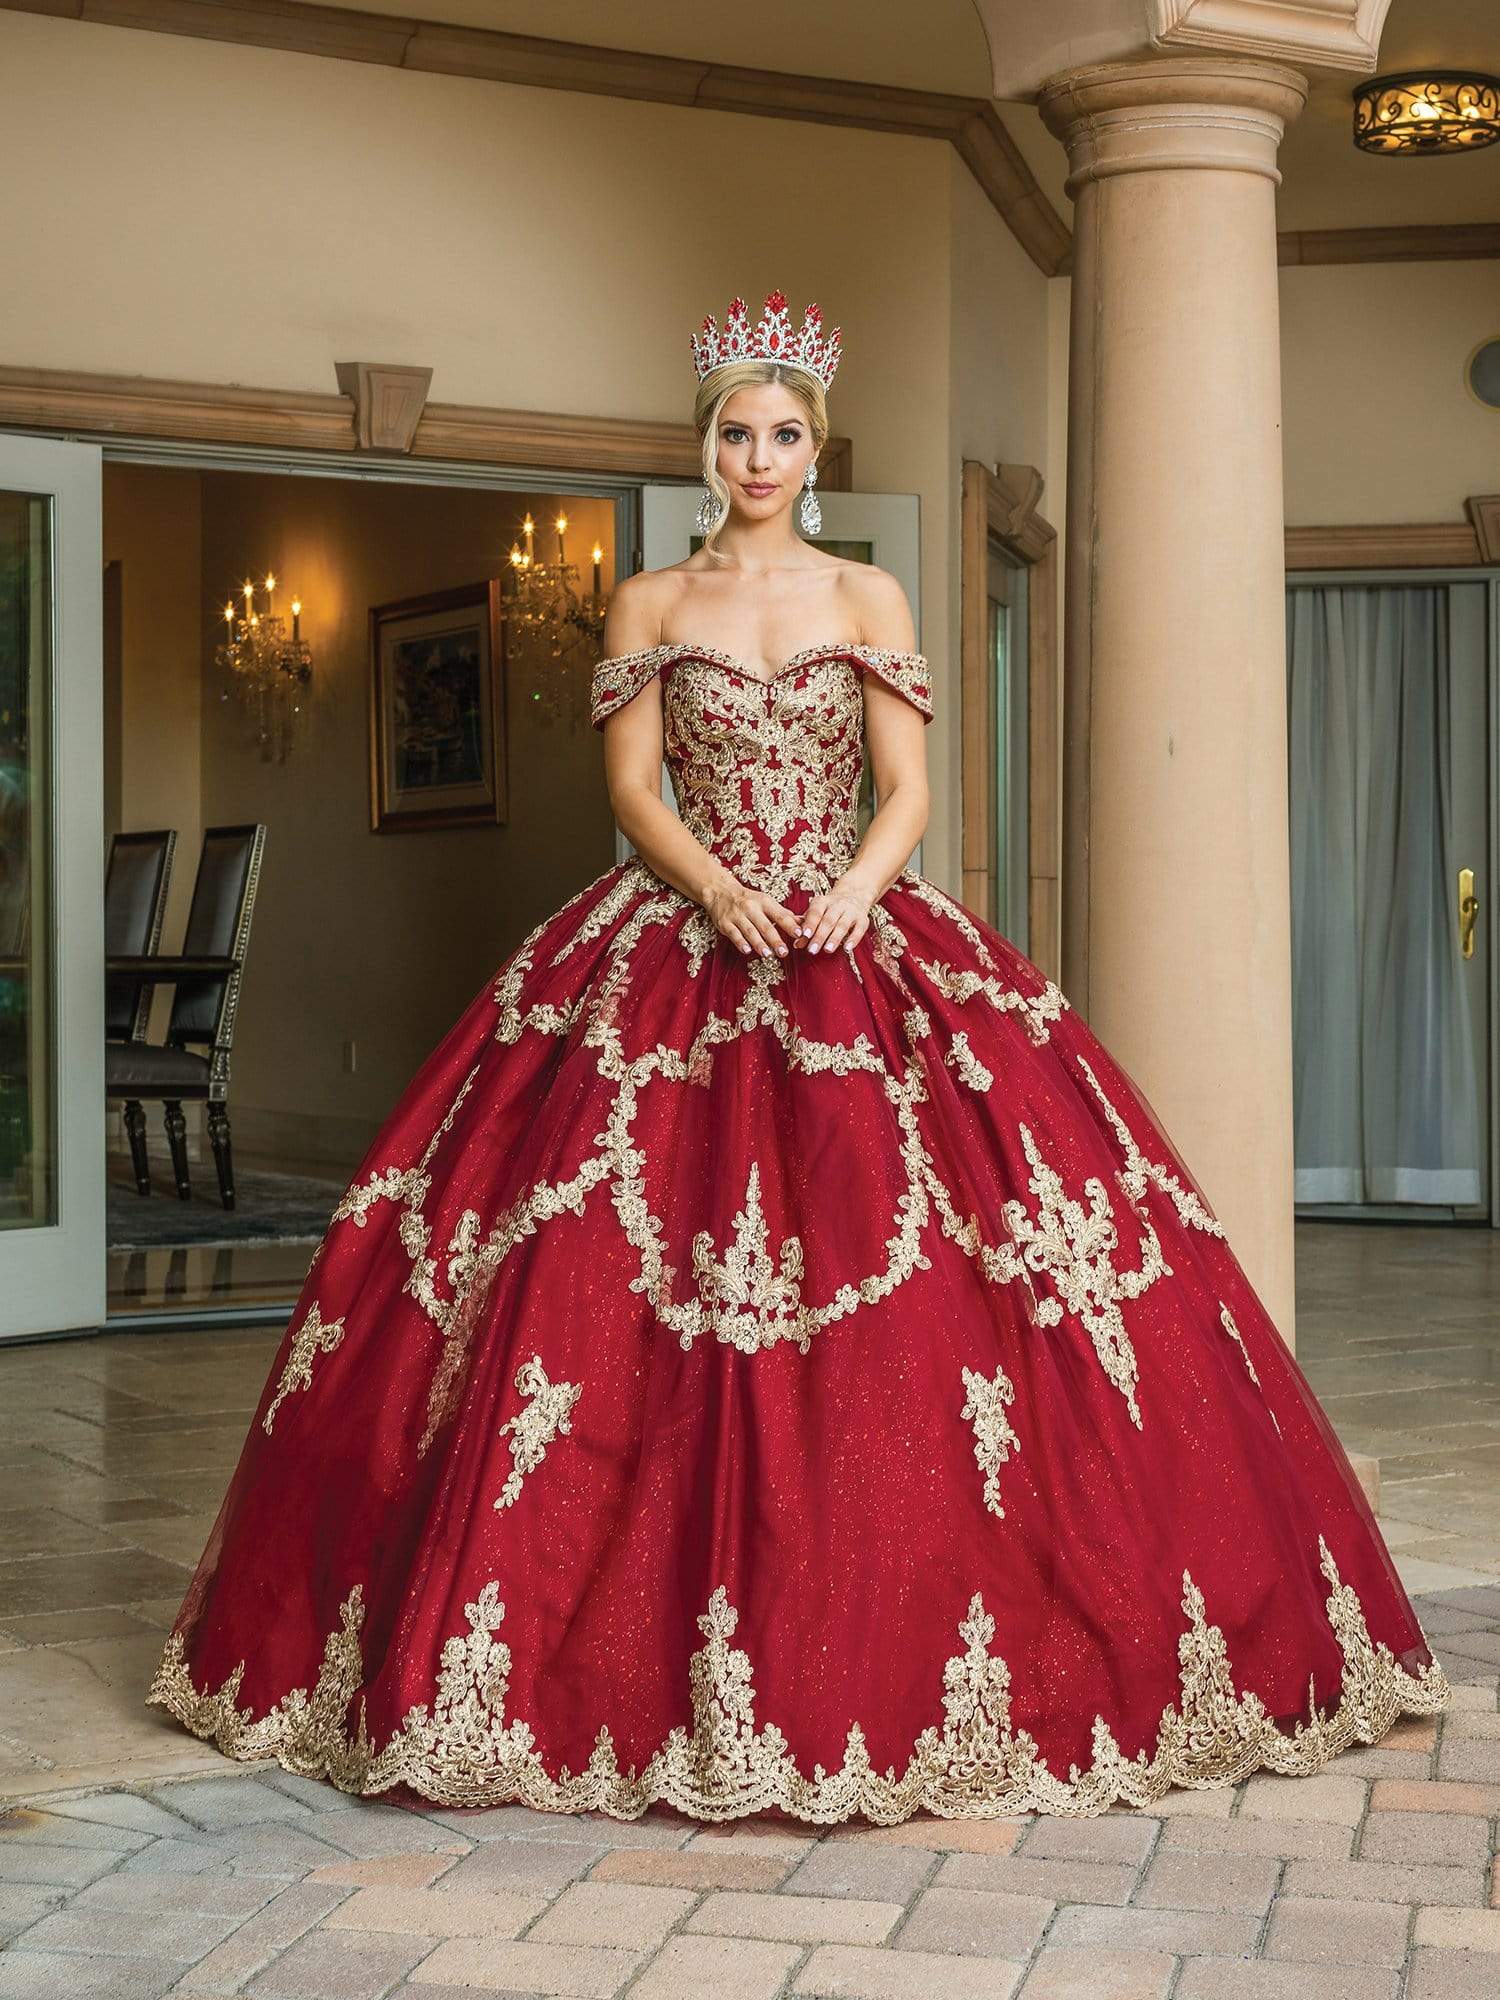 queen dress